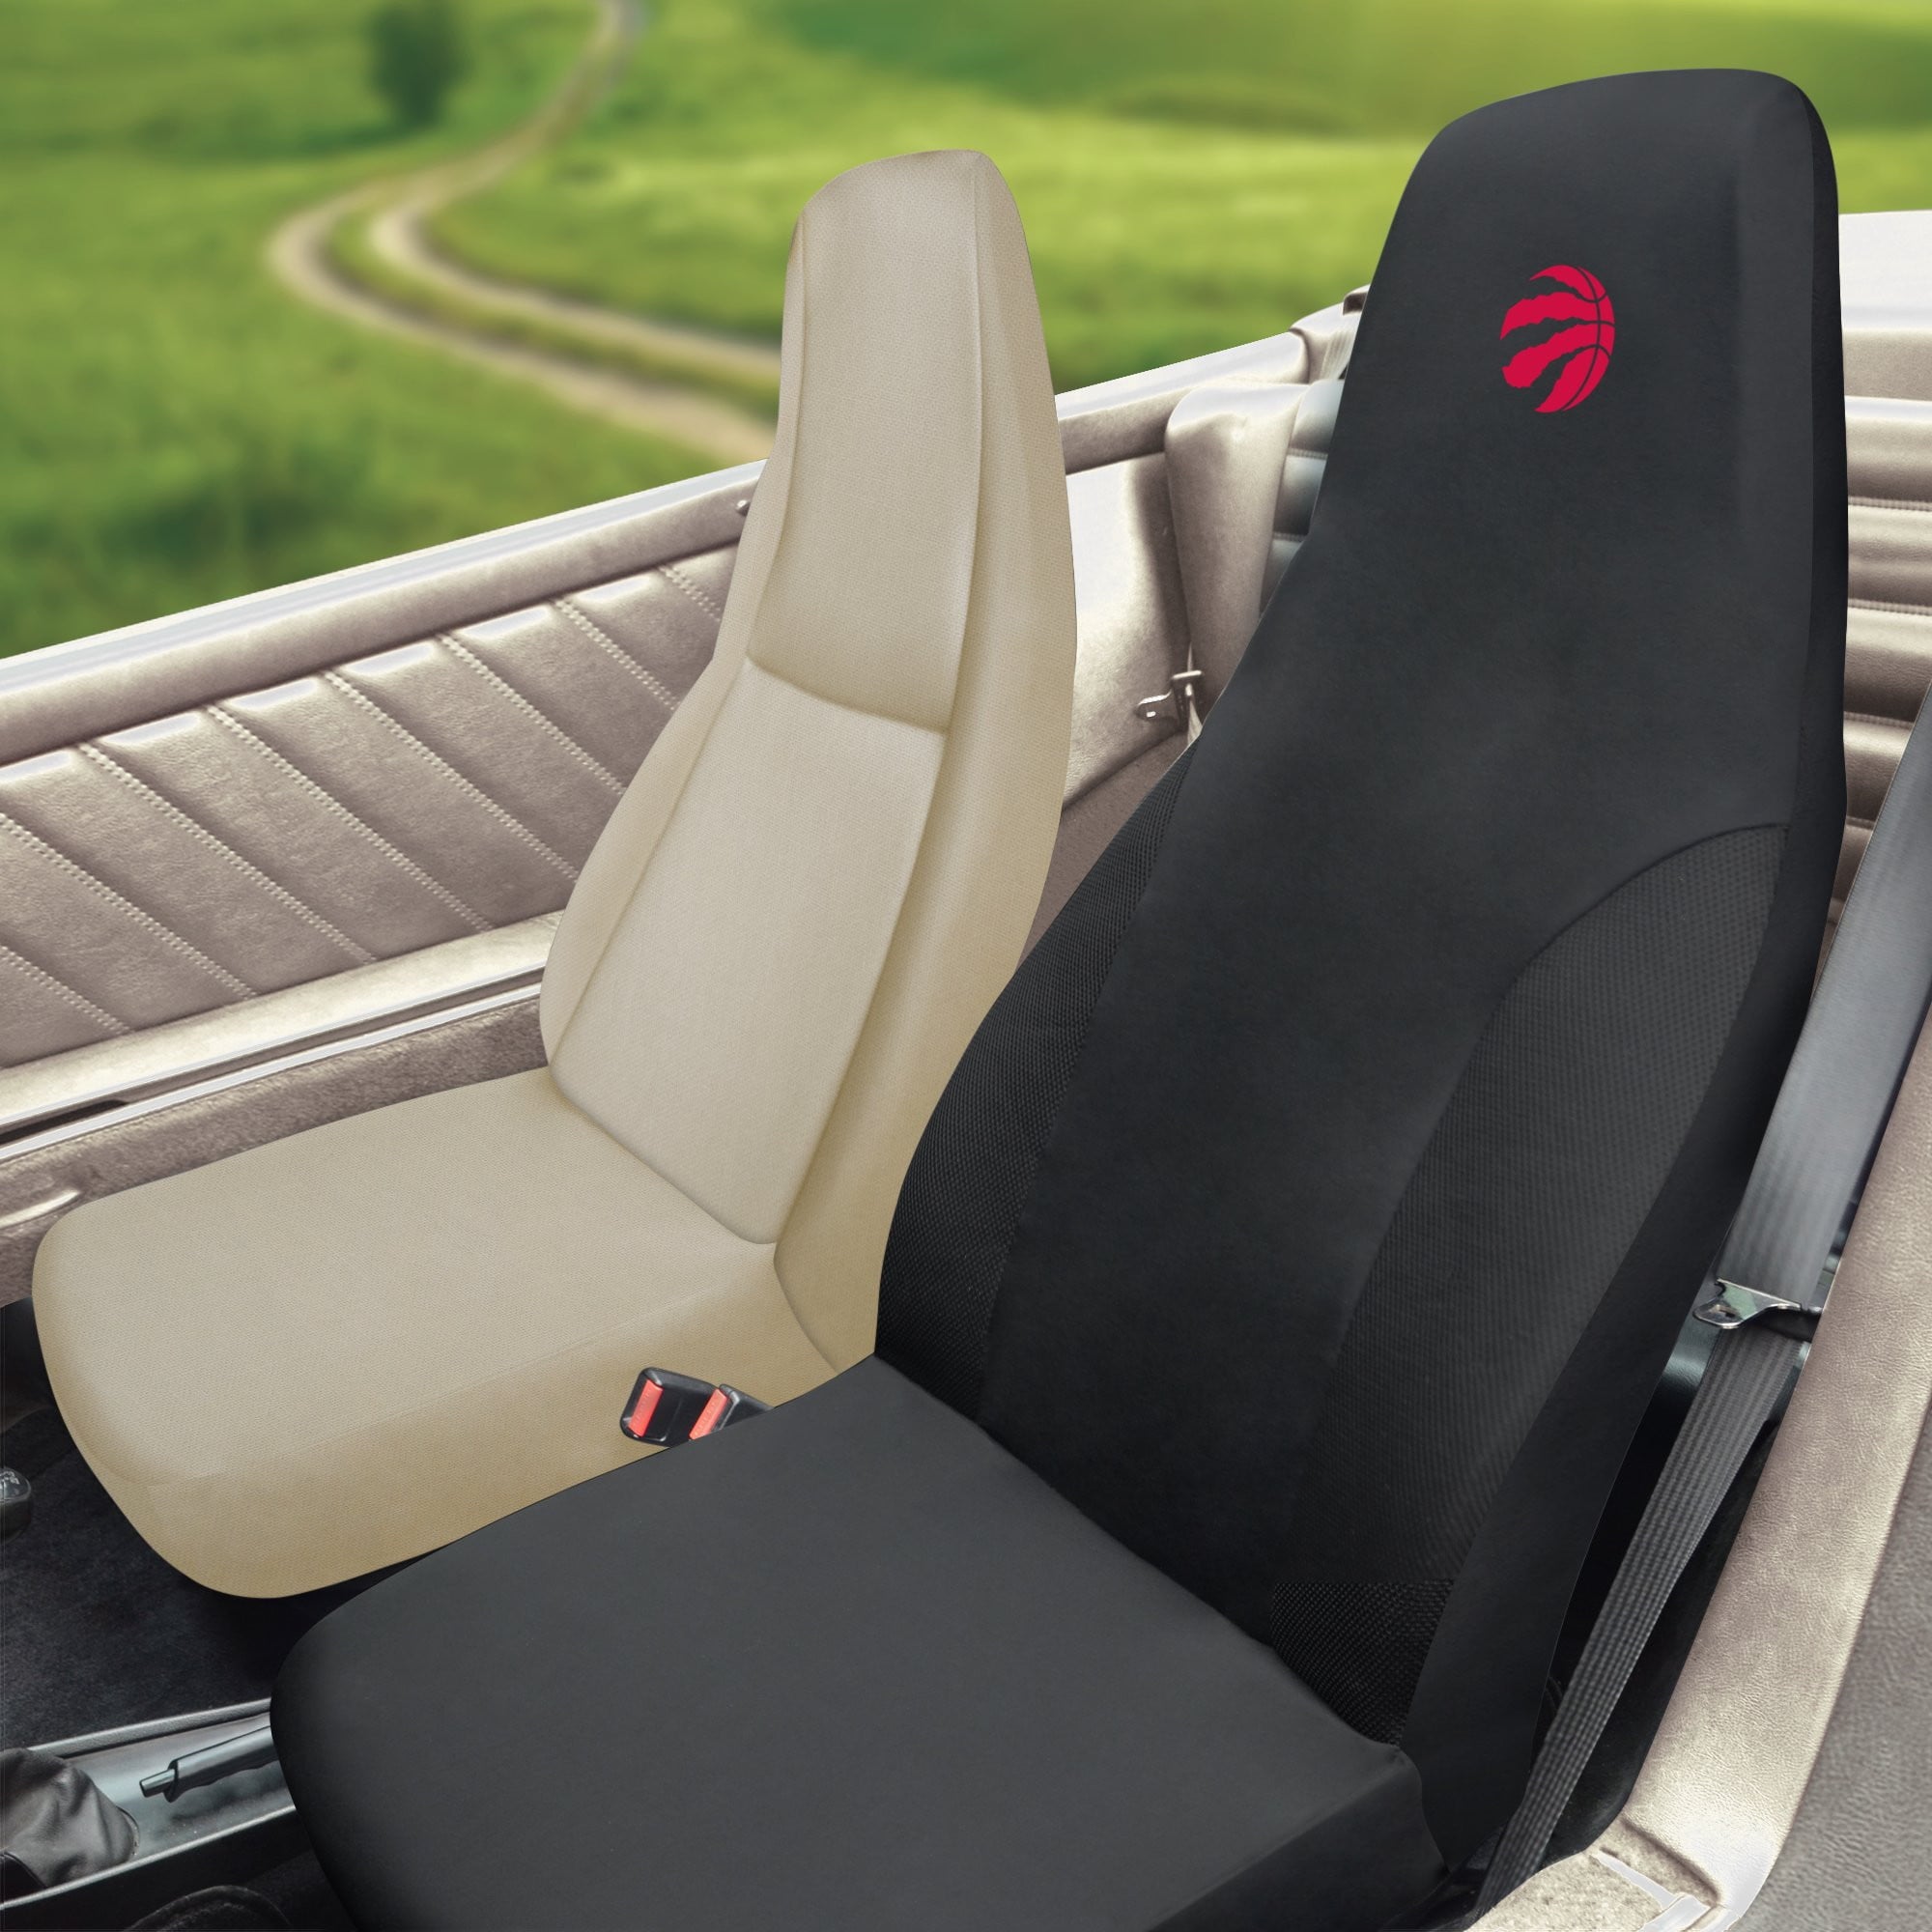 NBA - Toronto Raptors Set of 2 Car Seat Covers